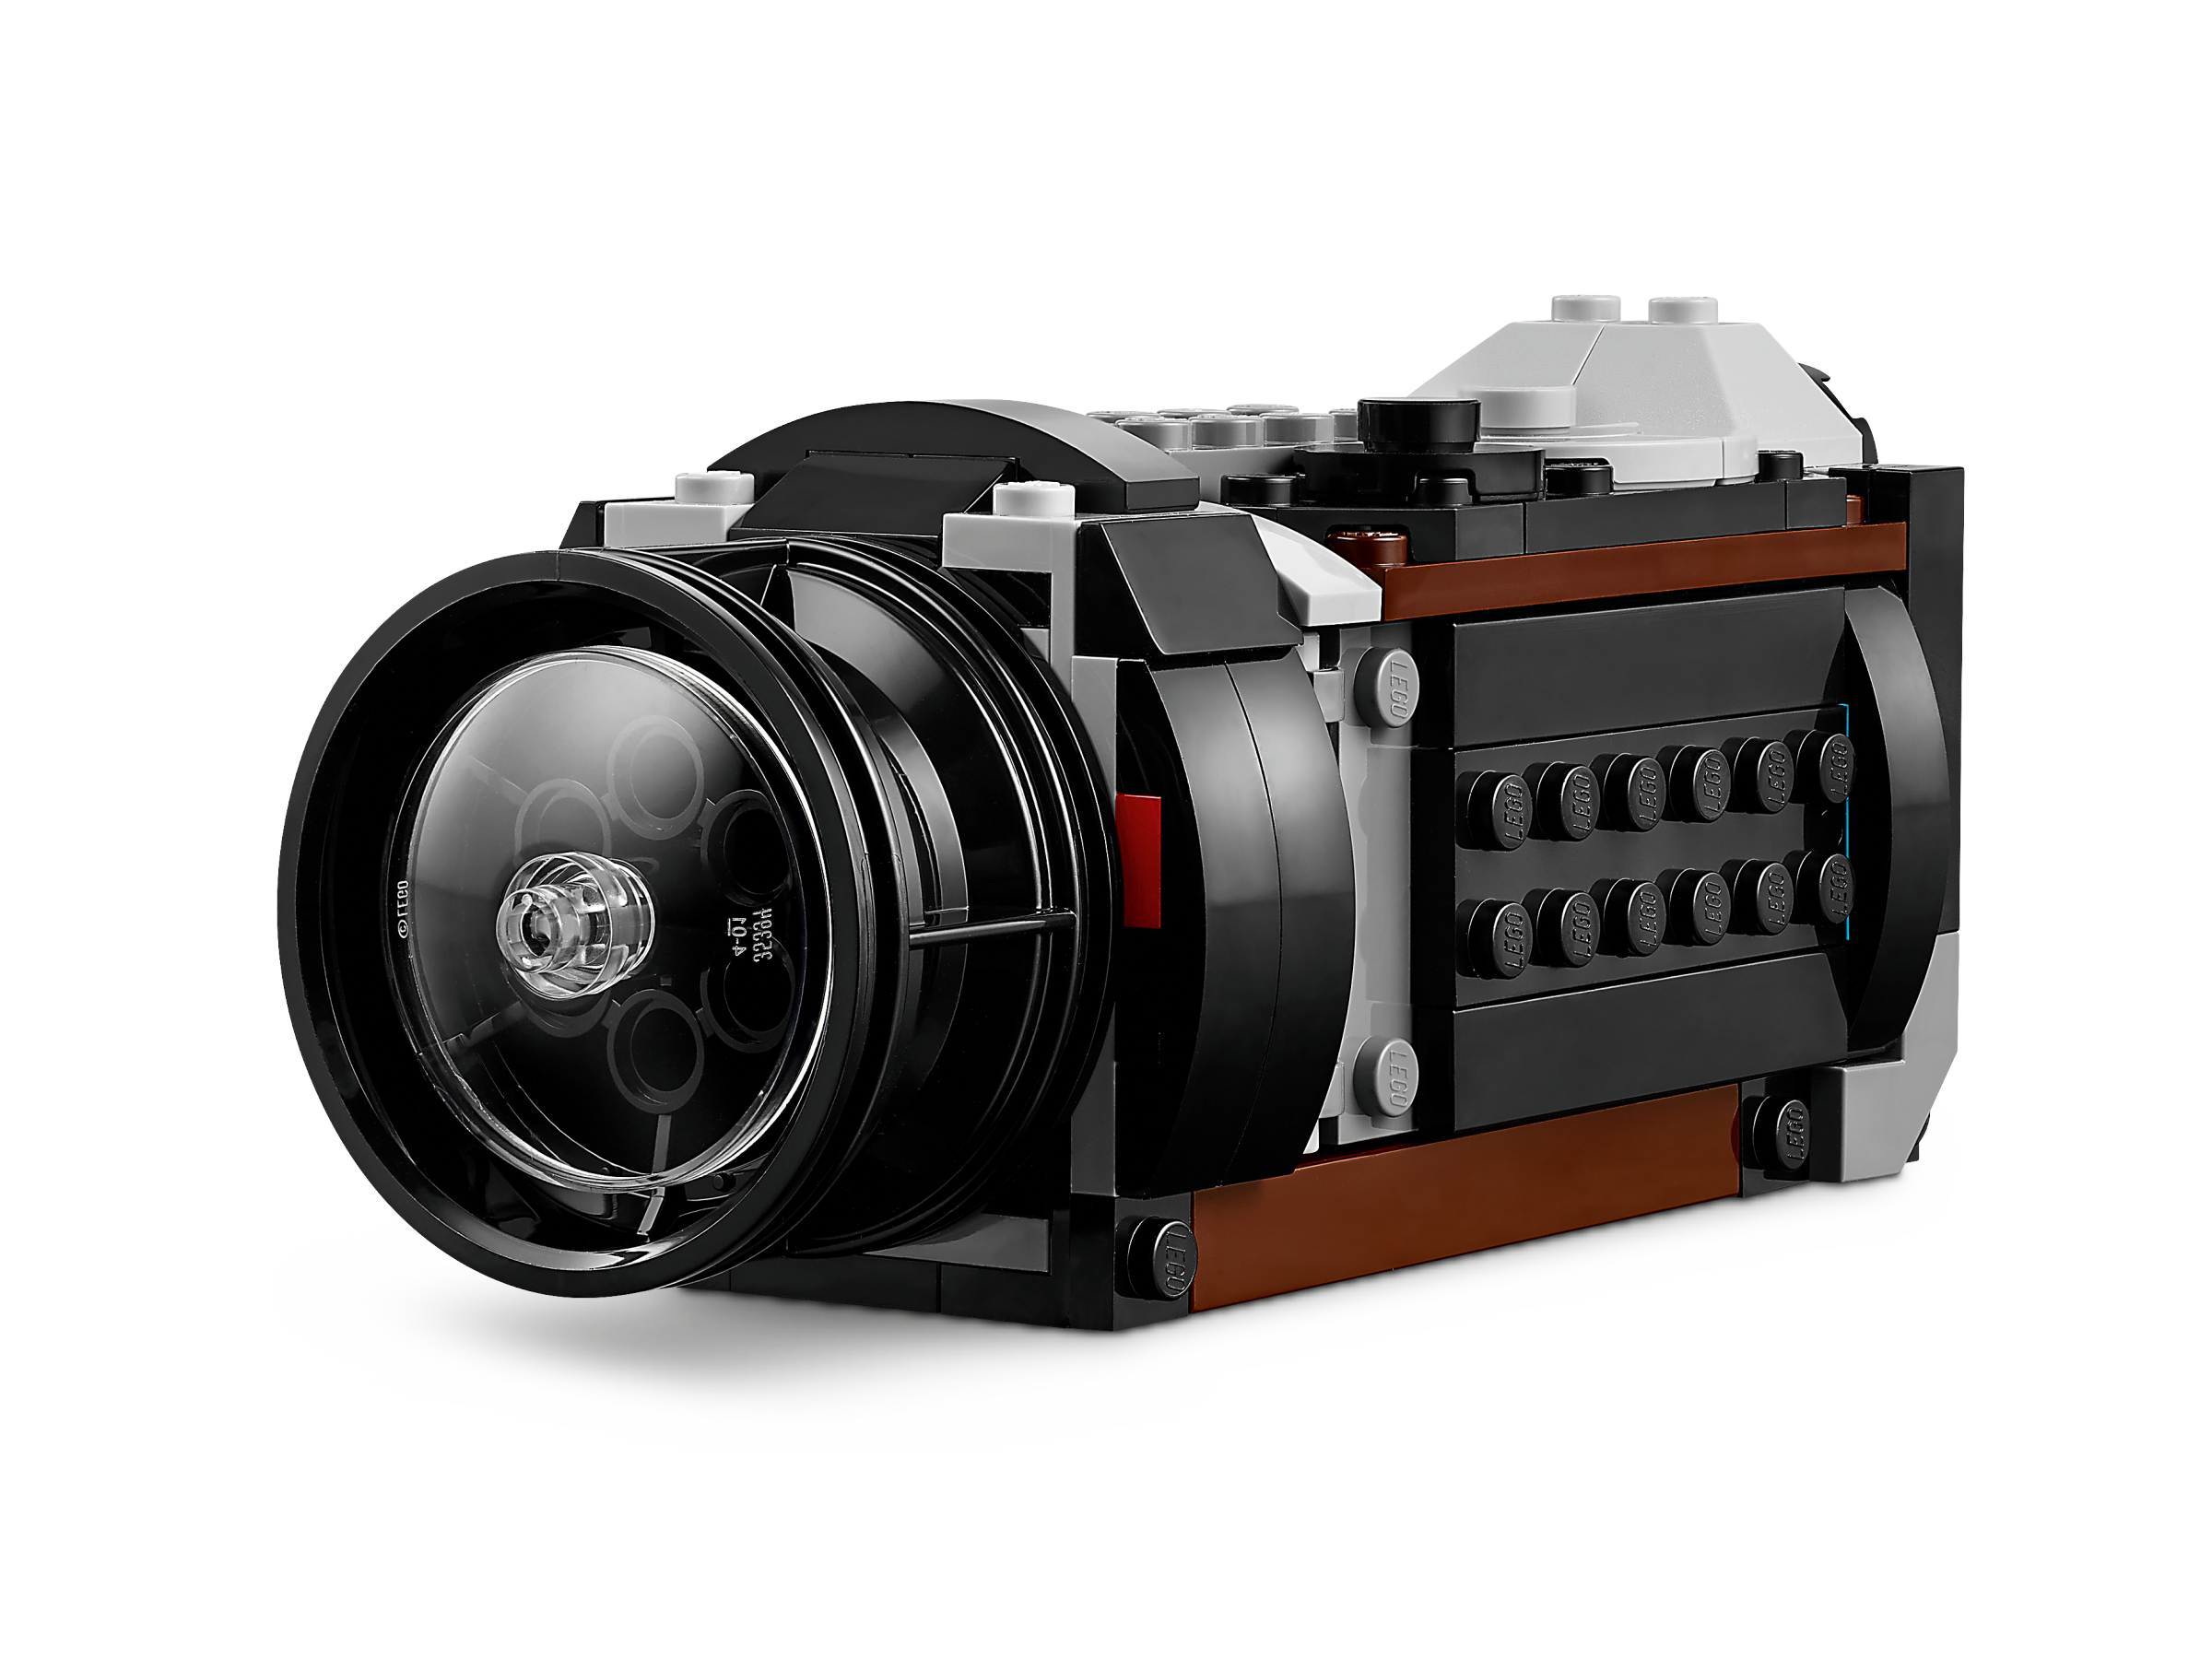 LEGO camera - Canon DSLR - All About The Bricks